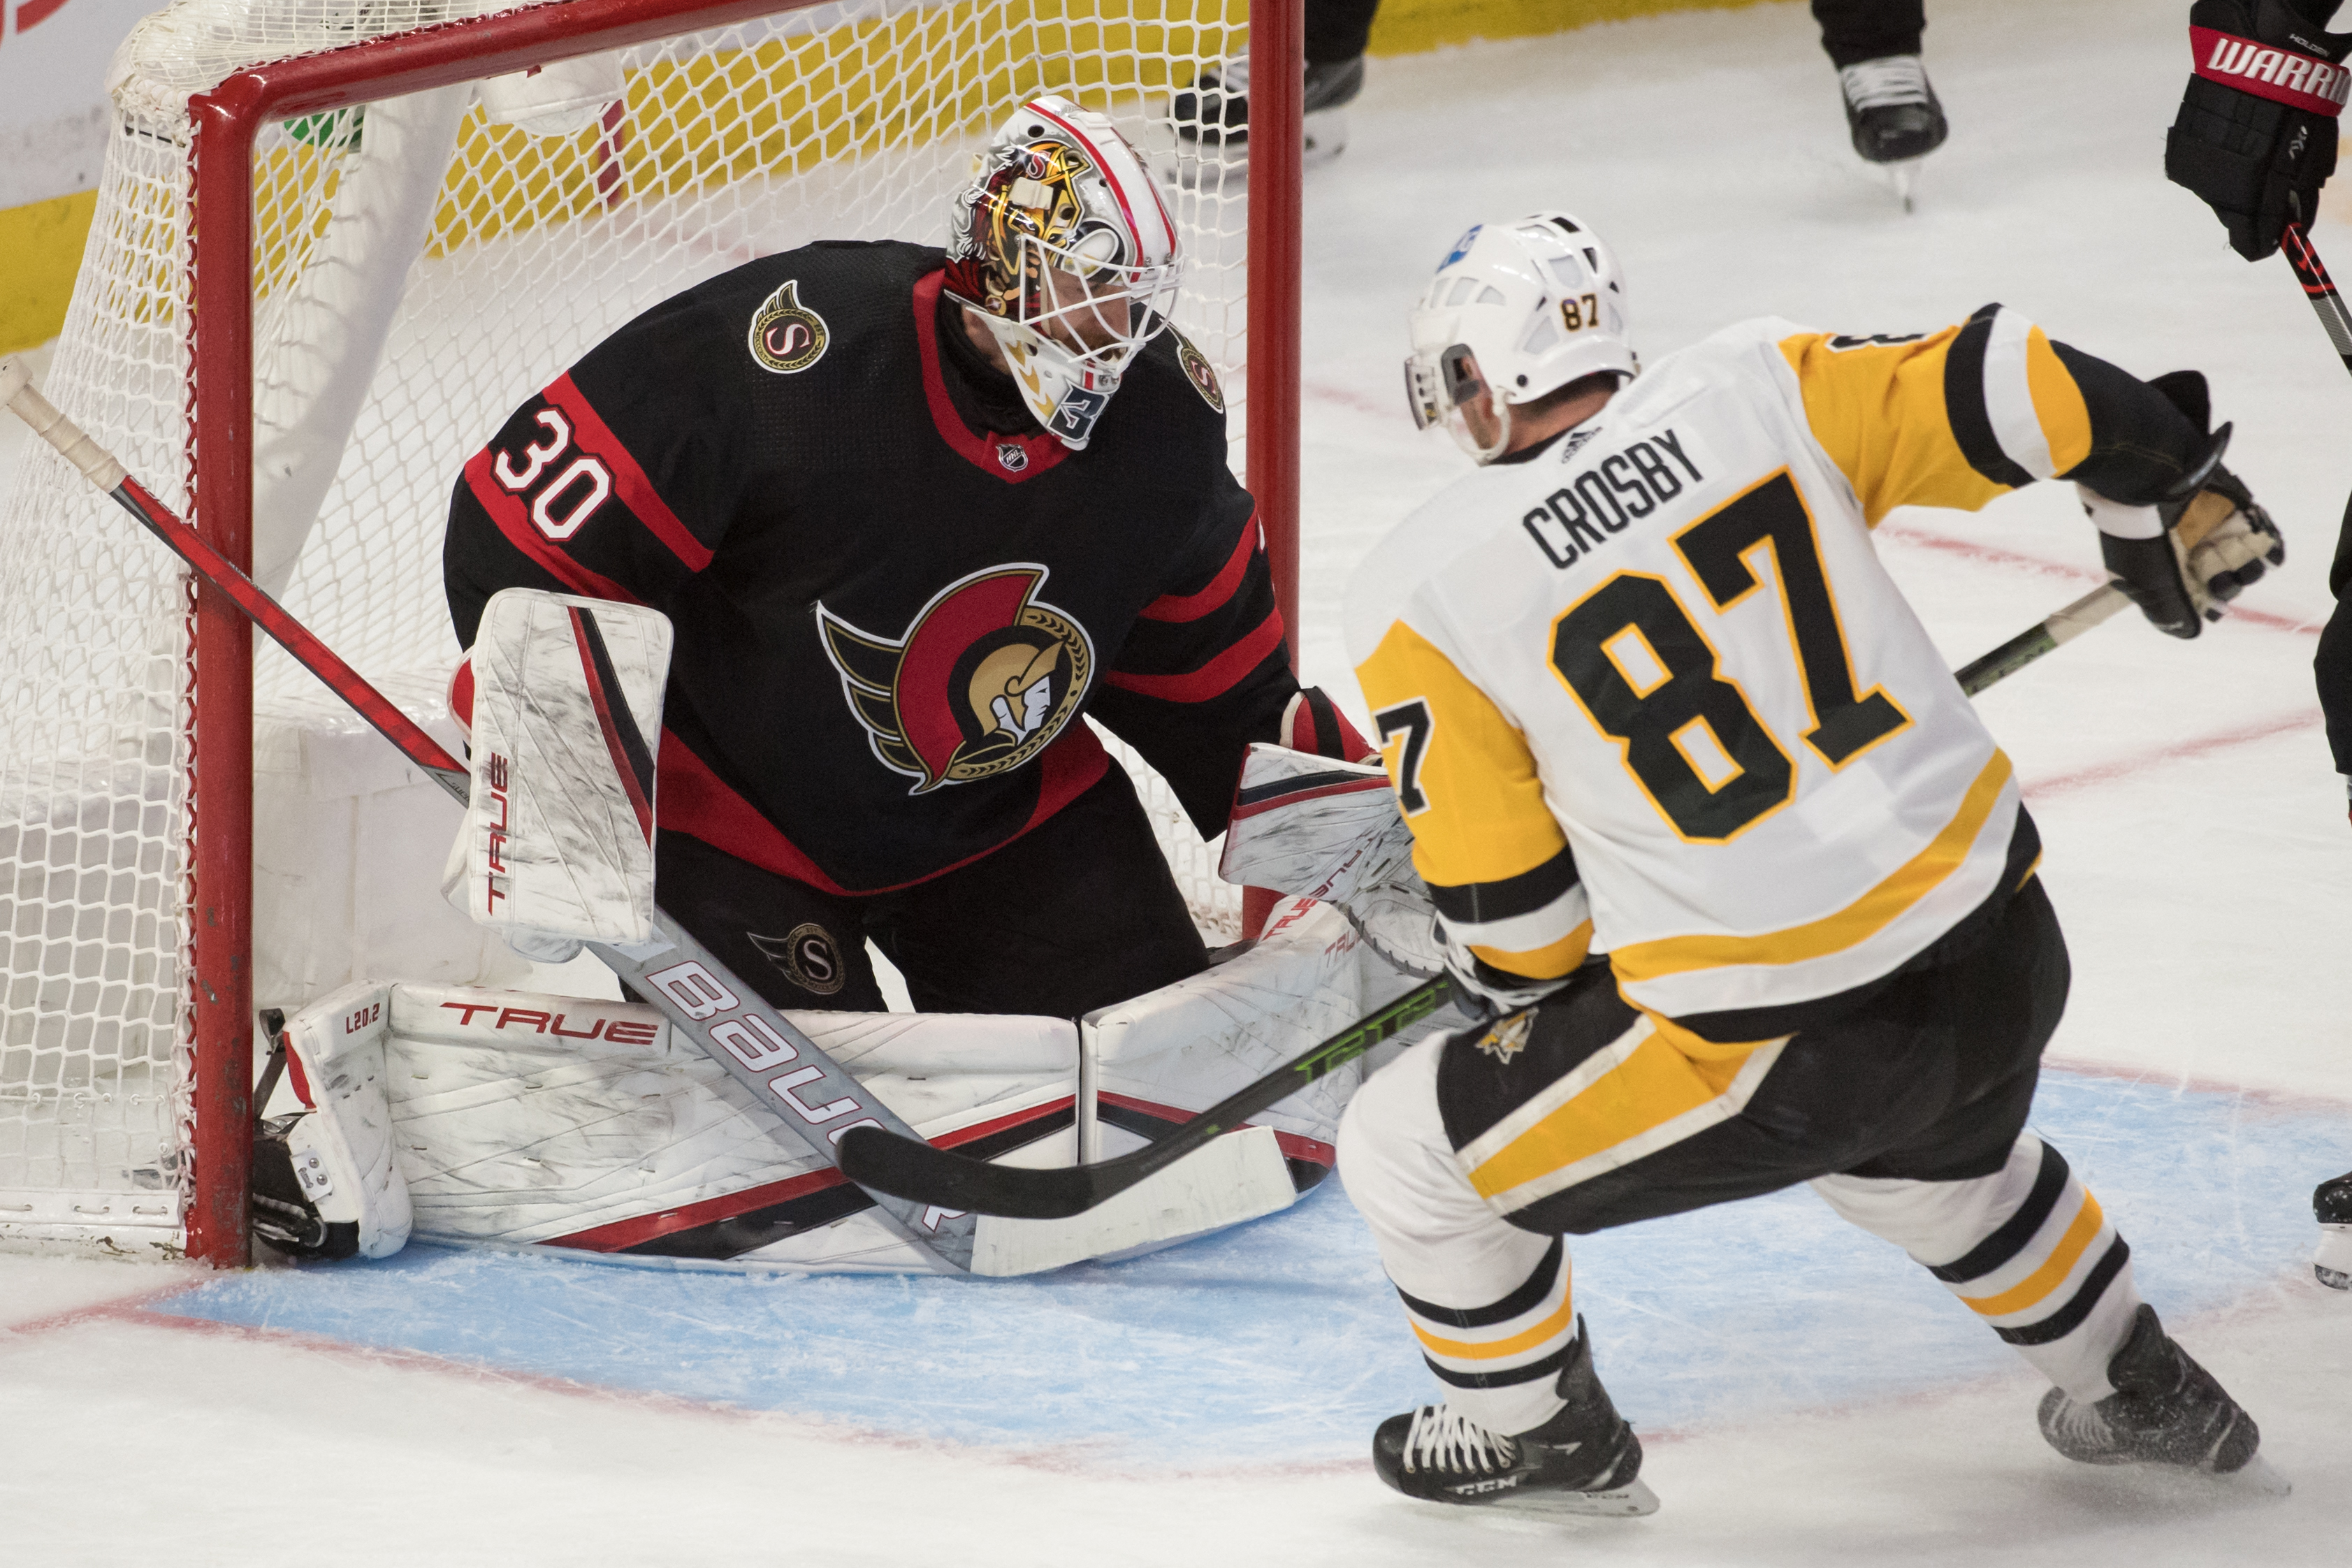 Penguins skate report: Sidney Crosby, Jeff Carter to play vs. Devils